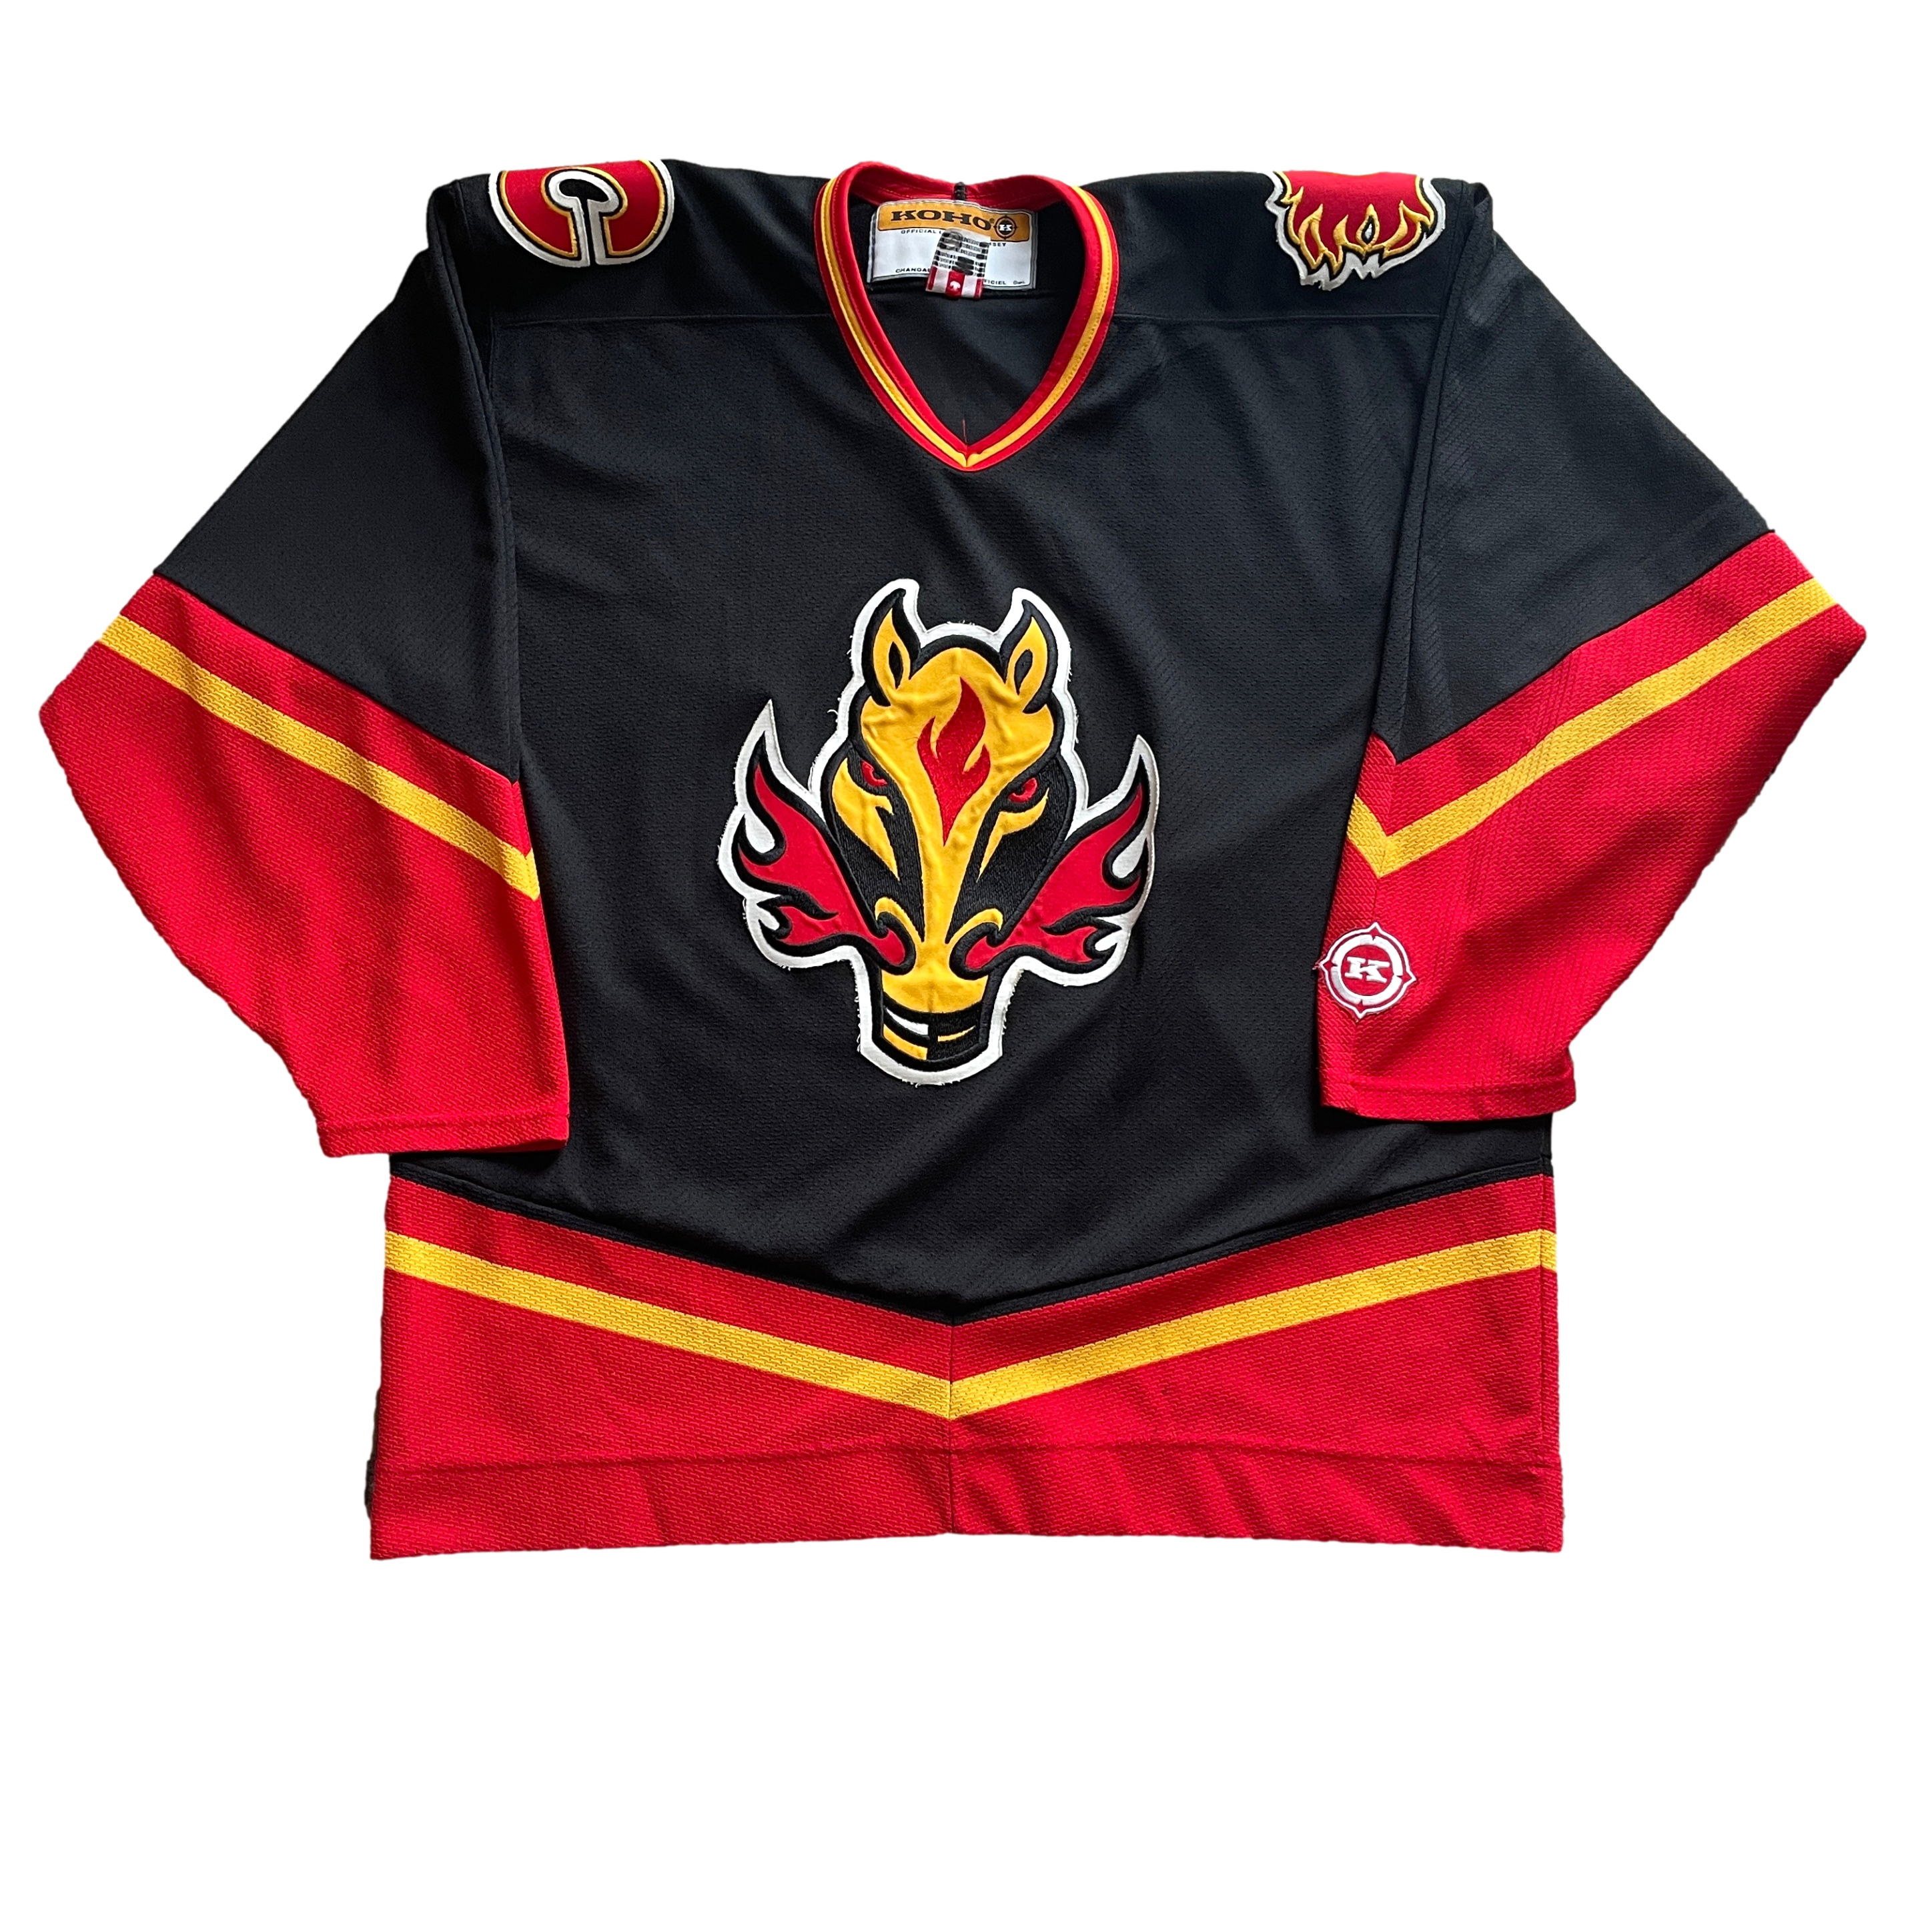 Vintage Calgary Flames NHL Hockey Jersey (XL)